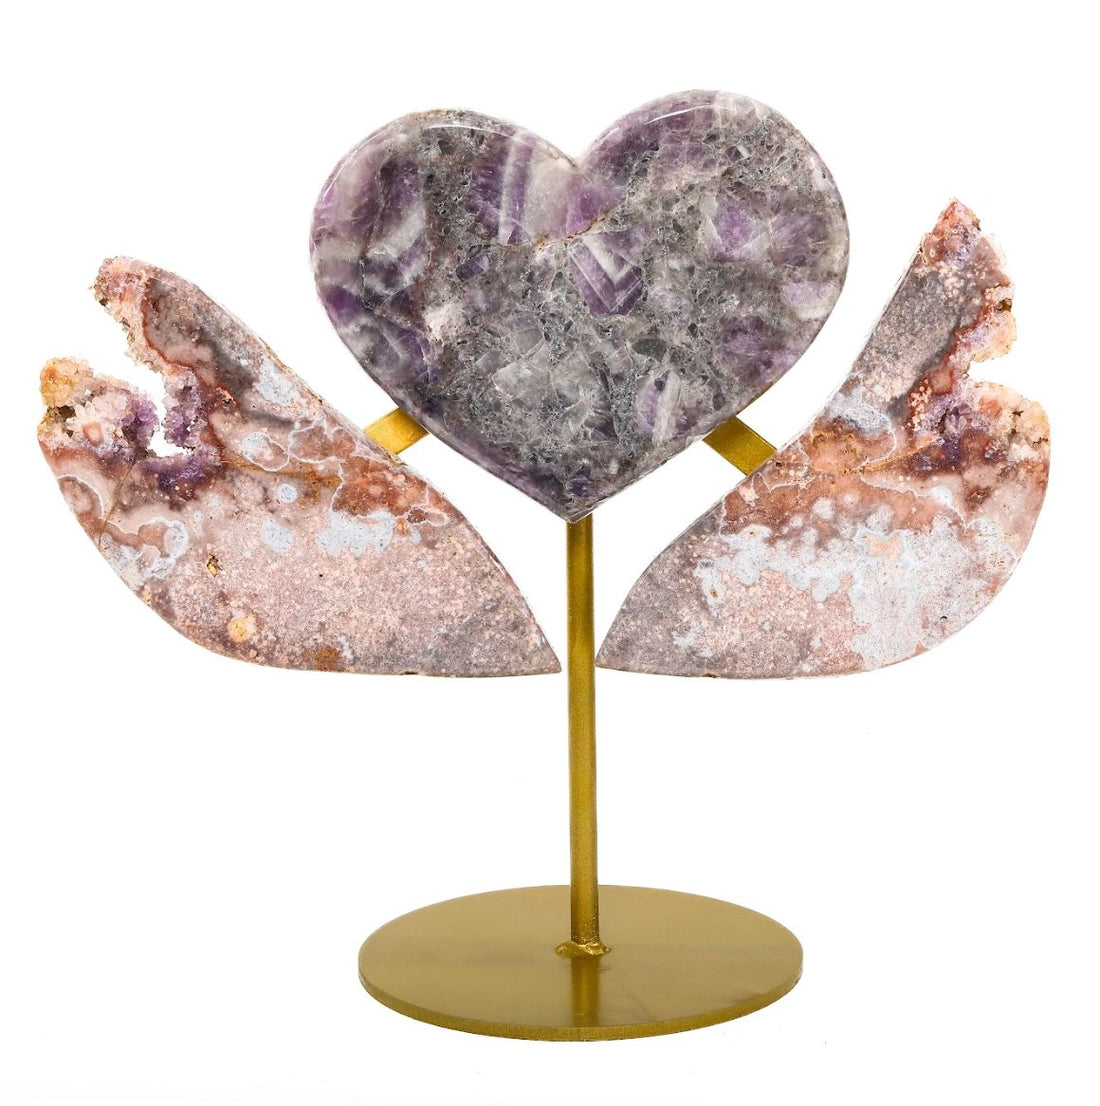 Amethyst Heart with wings on stand - Ele Keats Jewelry